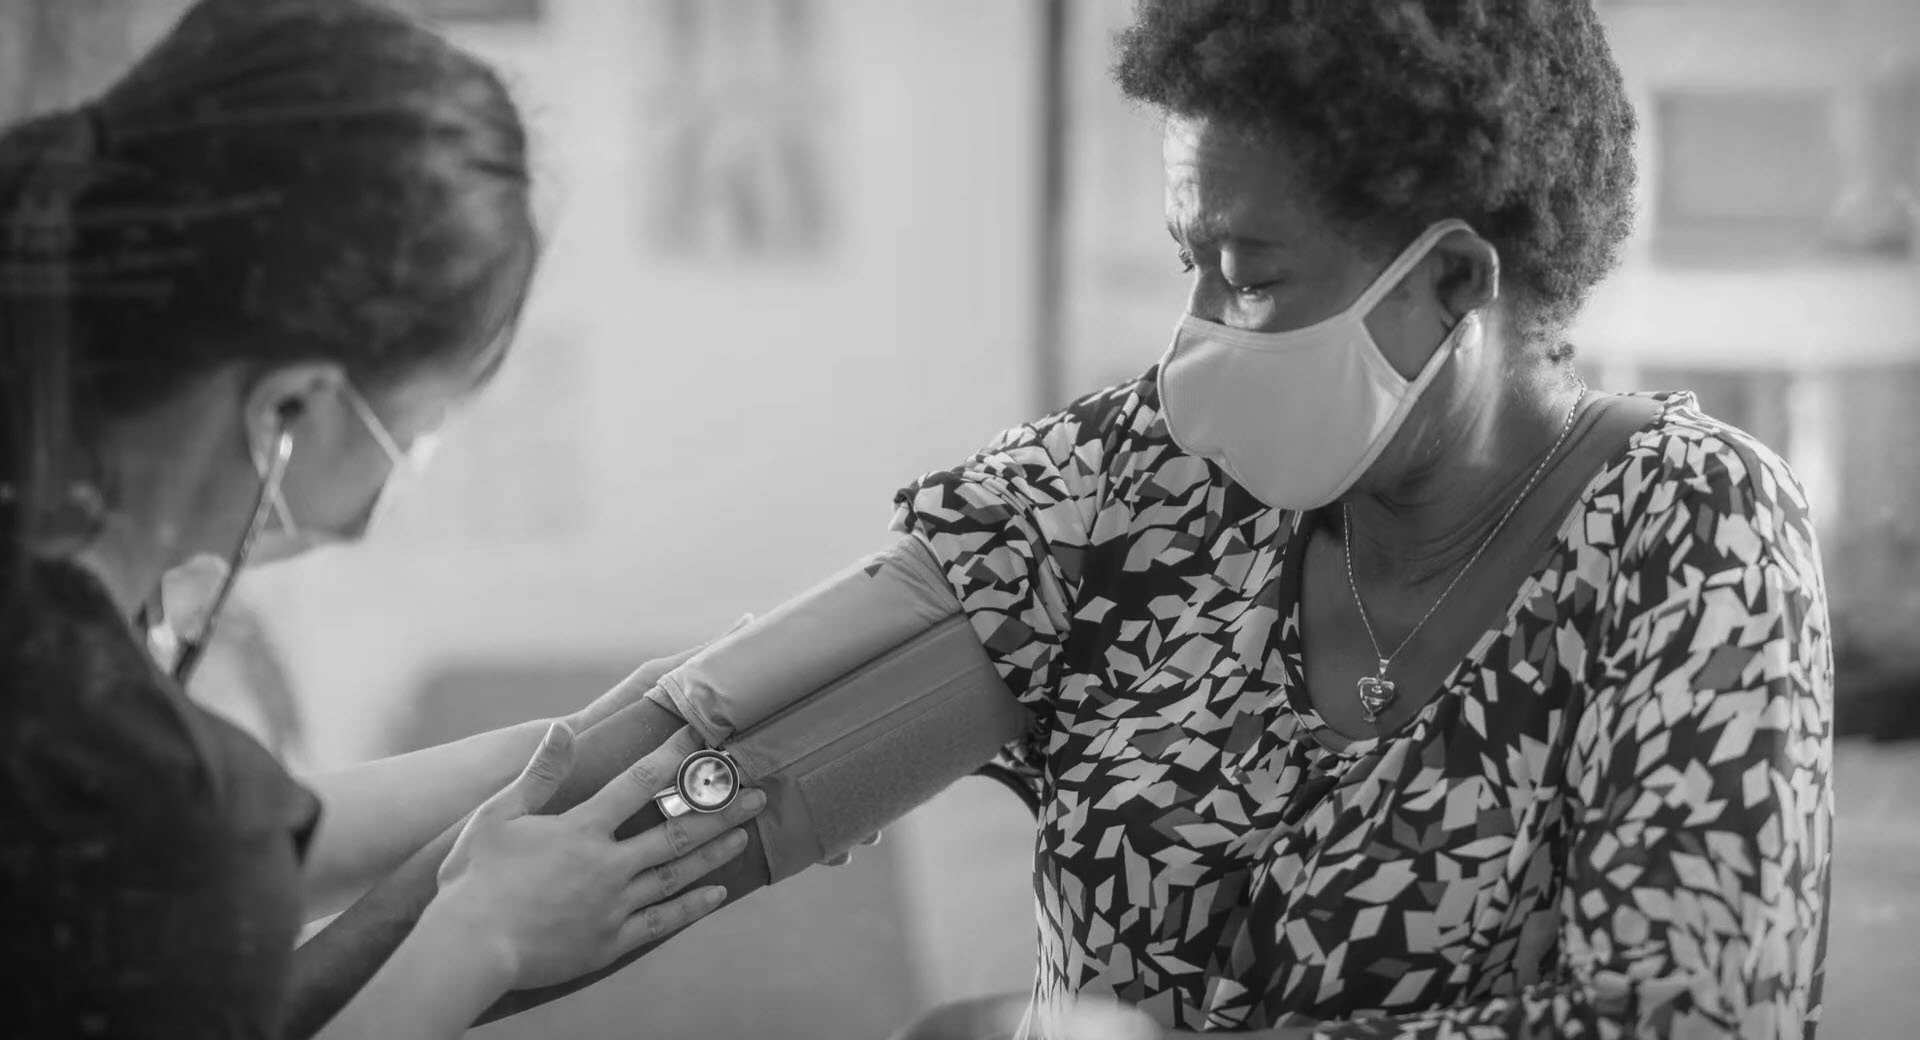 A medical professional checks a woman's blood pressure.